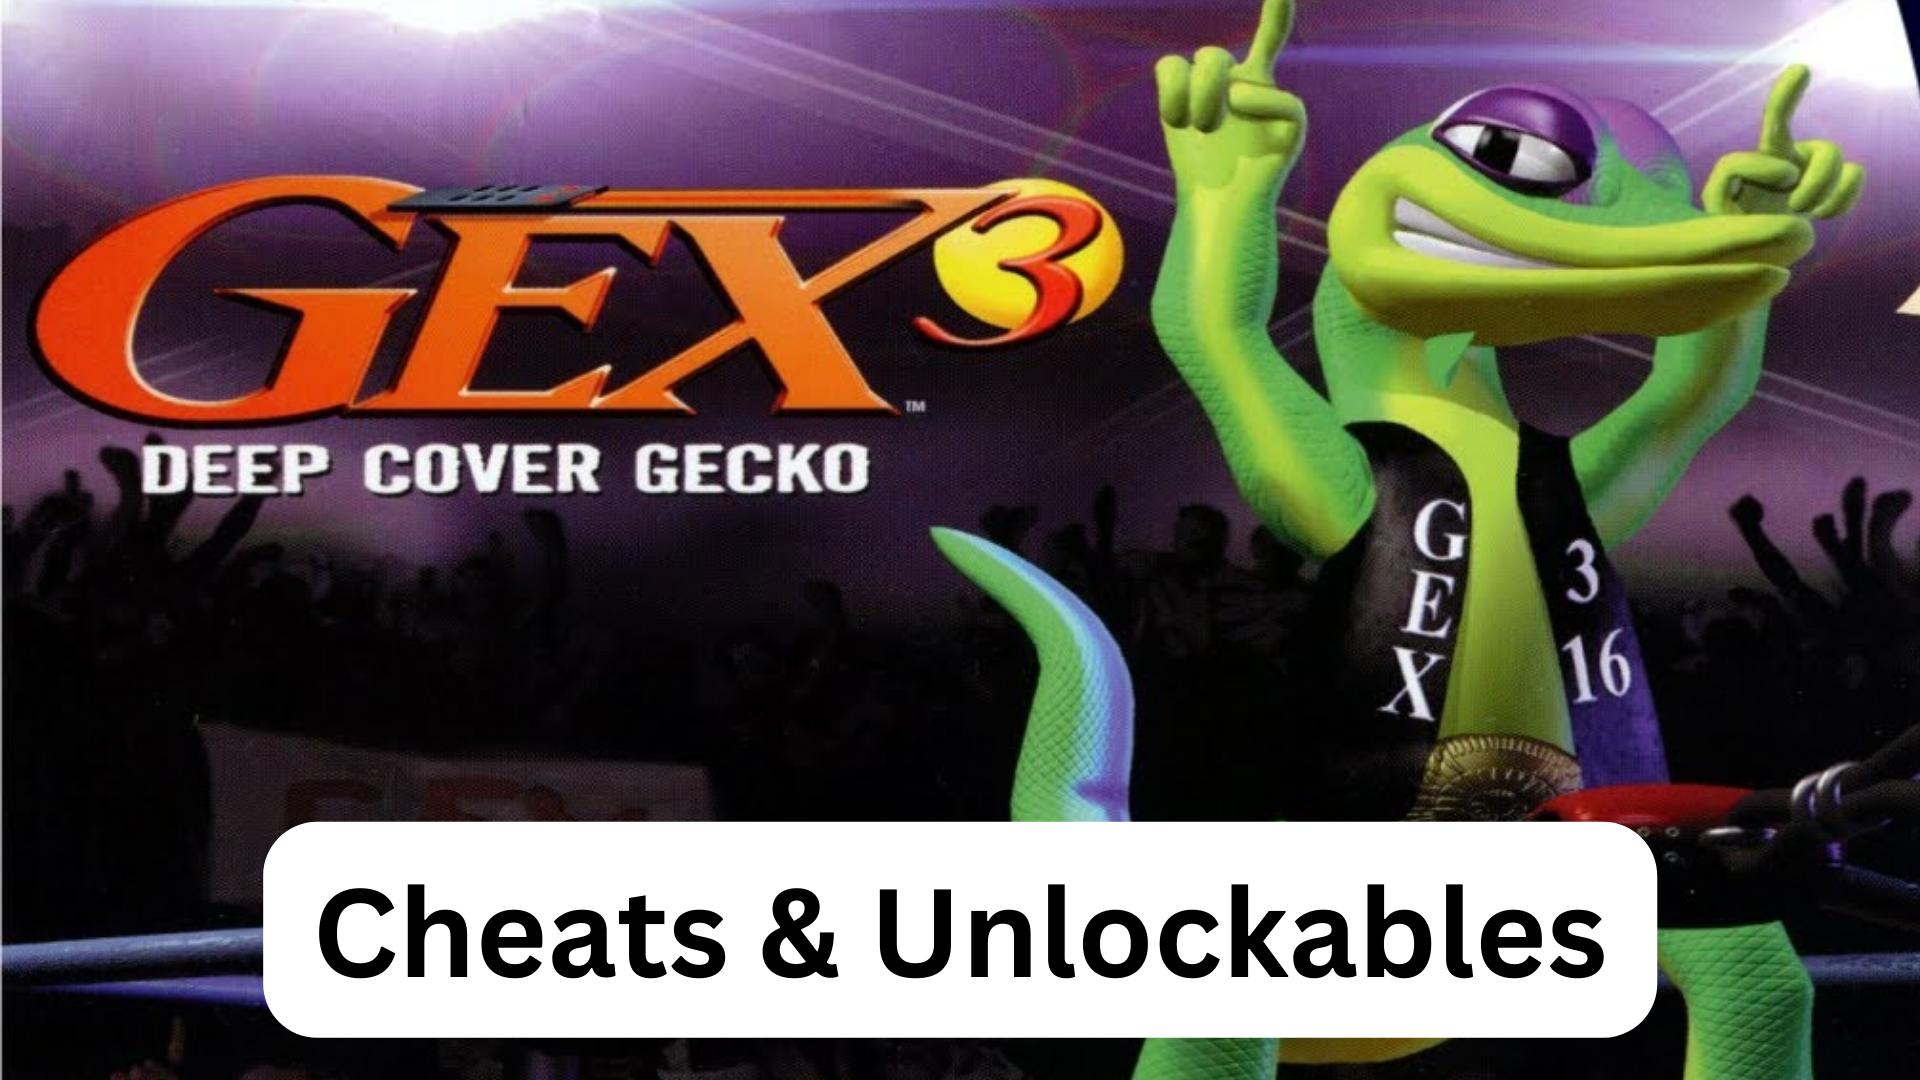 gex 3: deep cover gecko cheats and unlockables